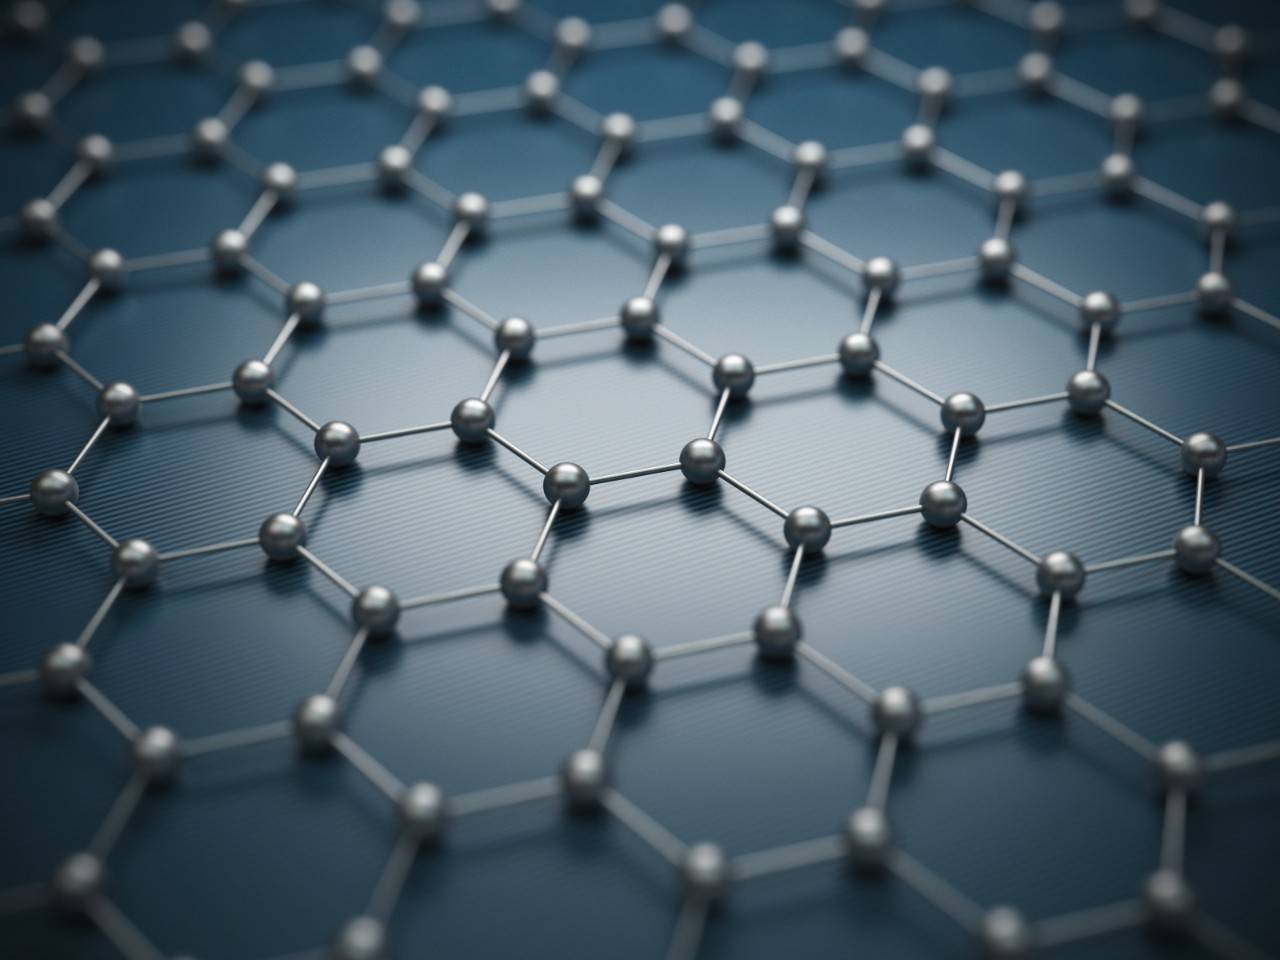 molecules of graphene, an innovative material